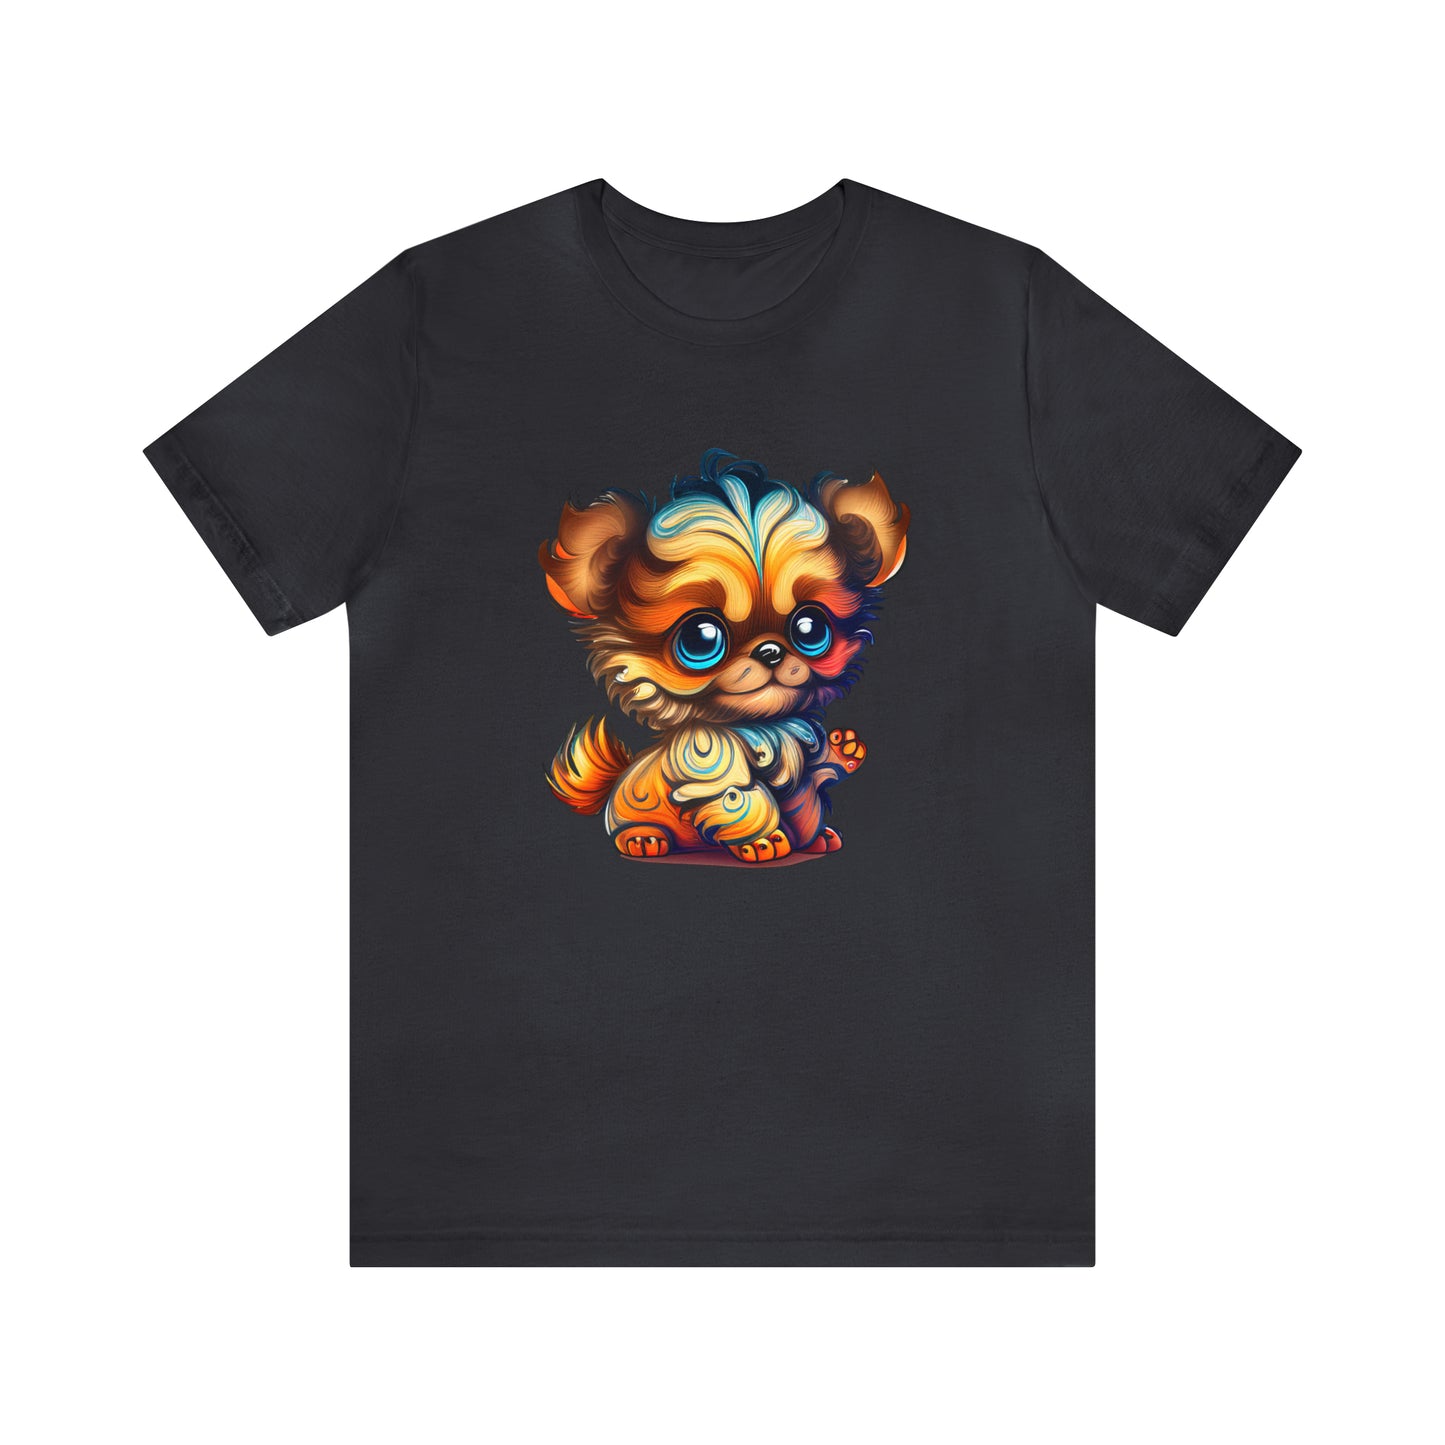 psychedelicBRANDz's Woof Wave Wonder featuring a cute puppy on a dark grey shirt